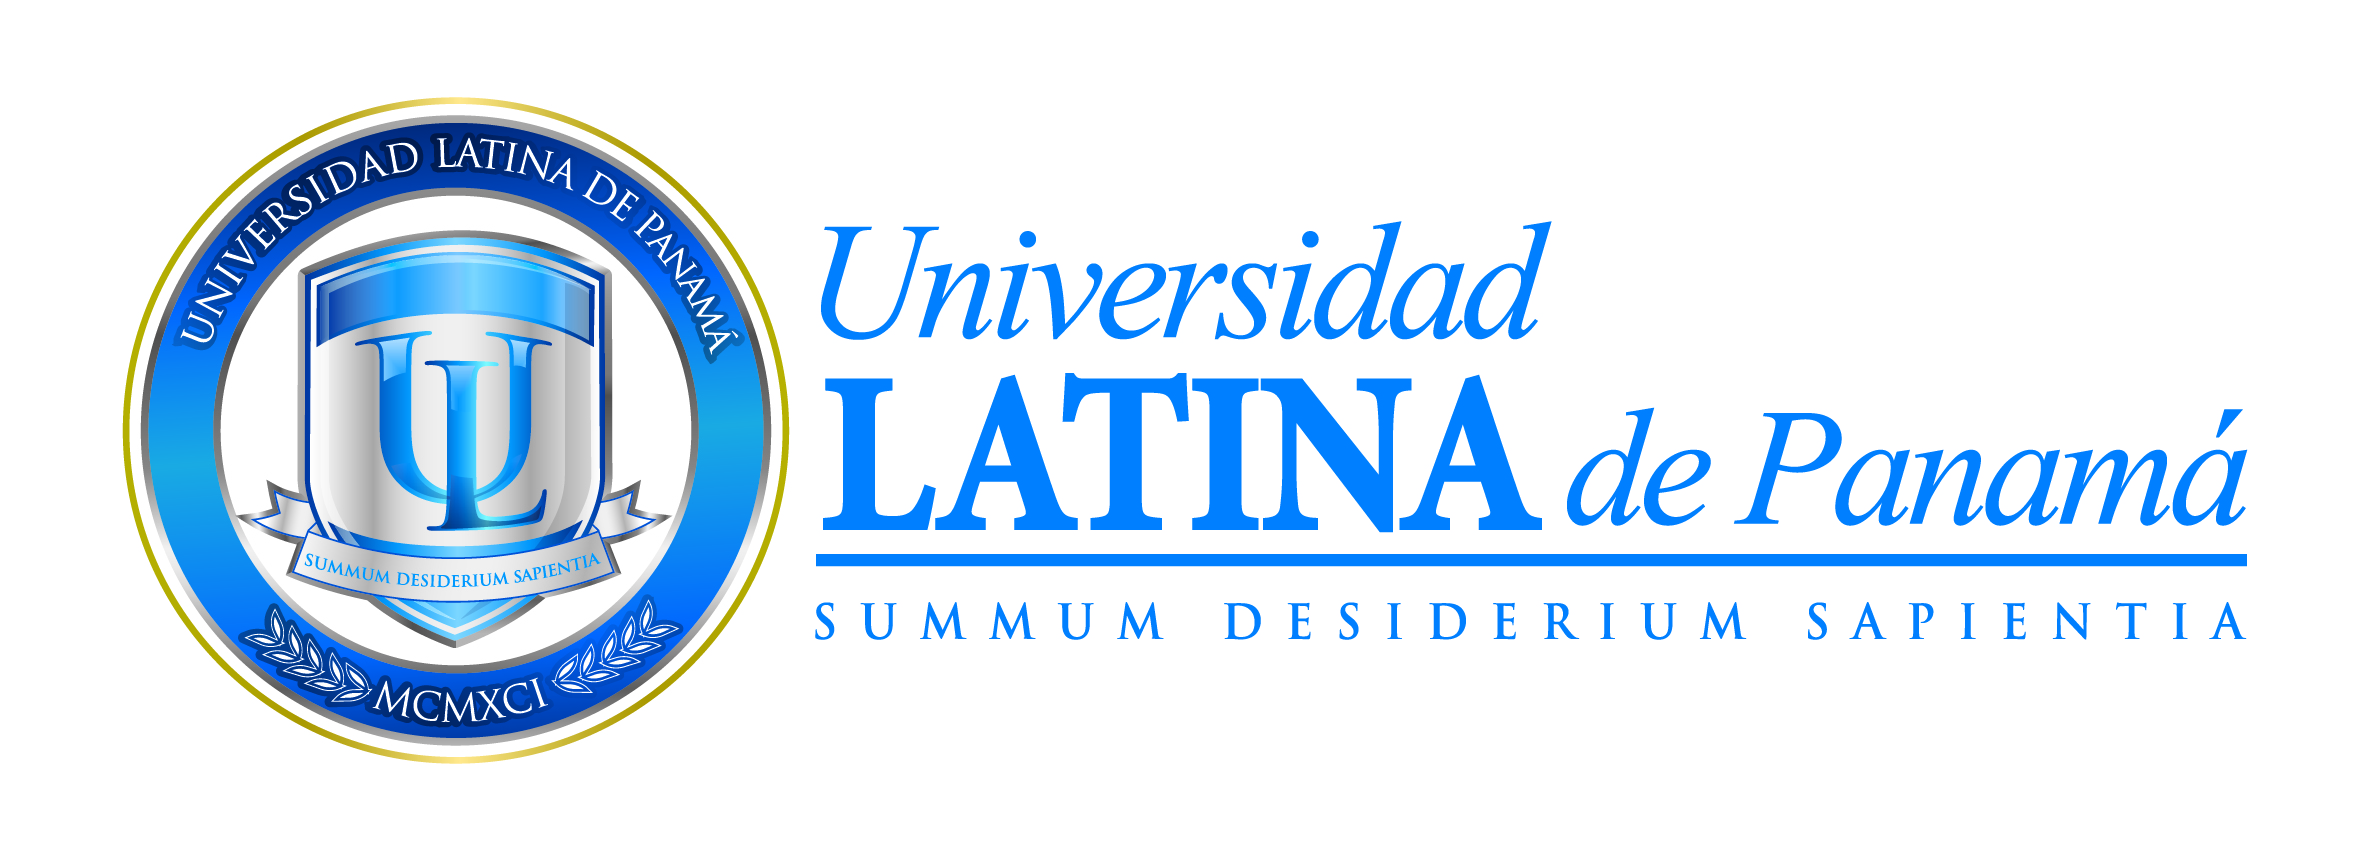 Universidad Latina Logo photo - 1